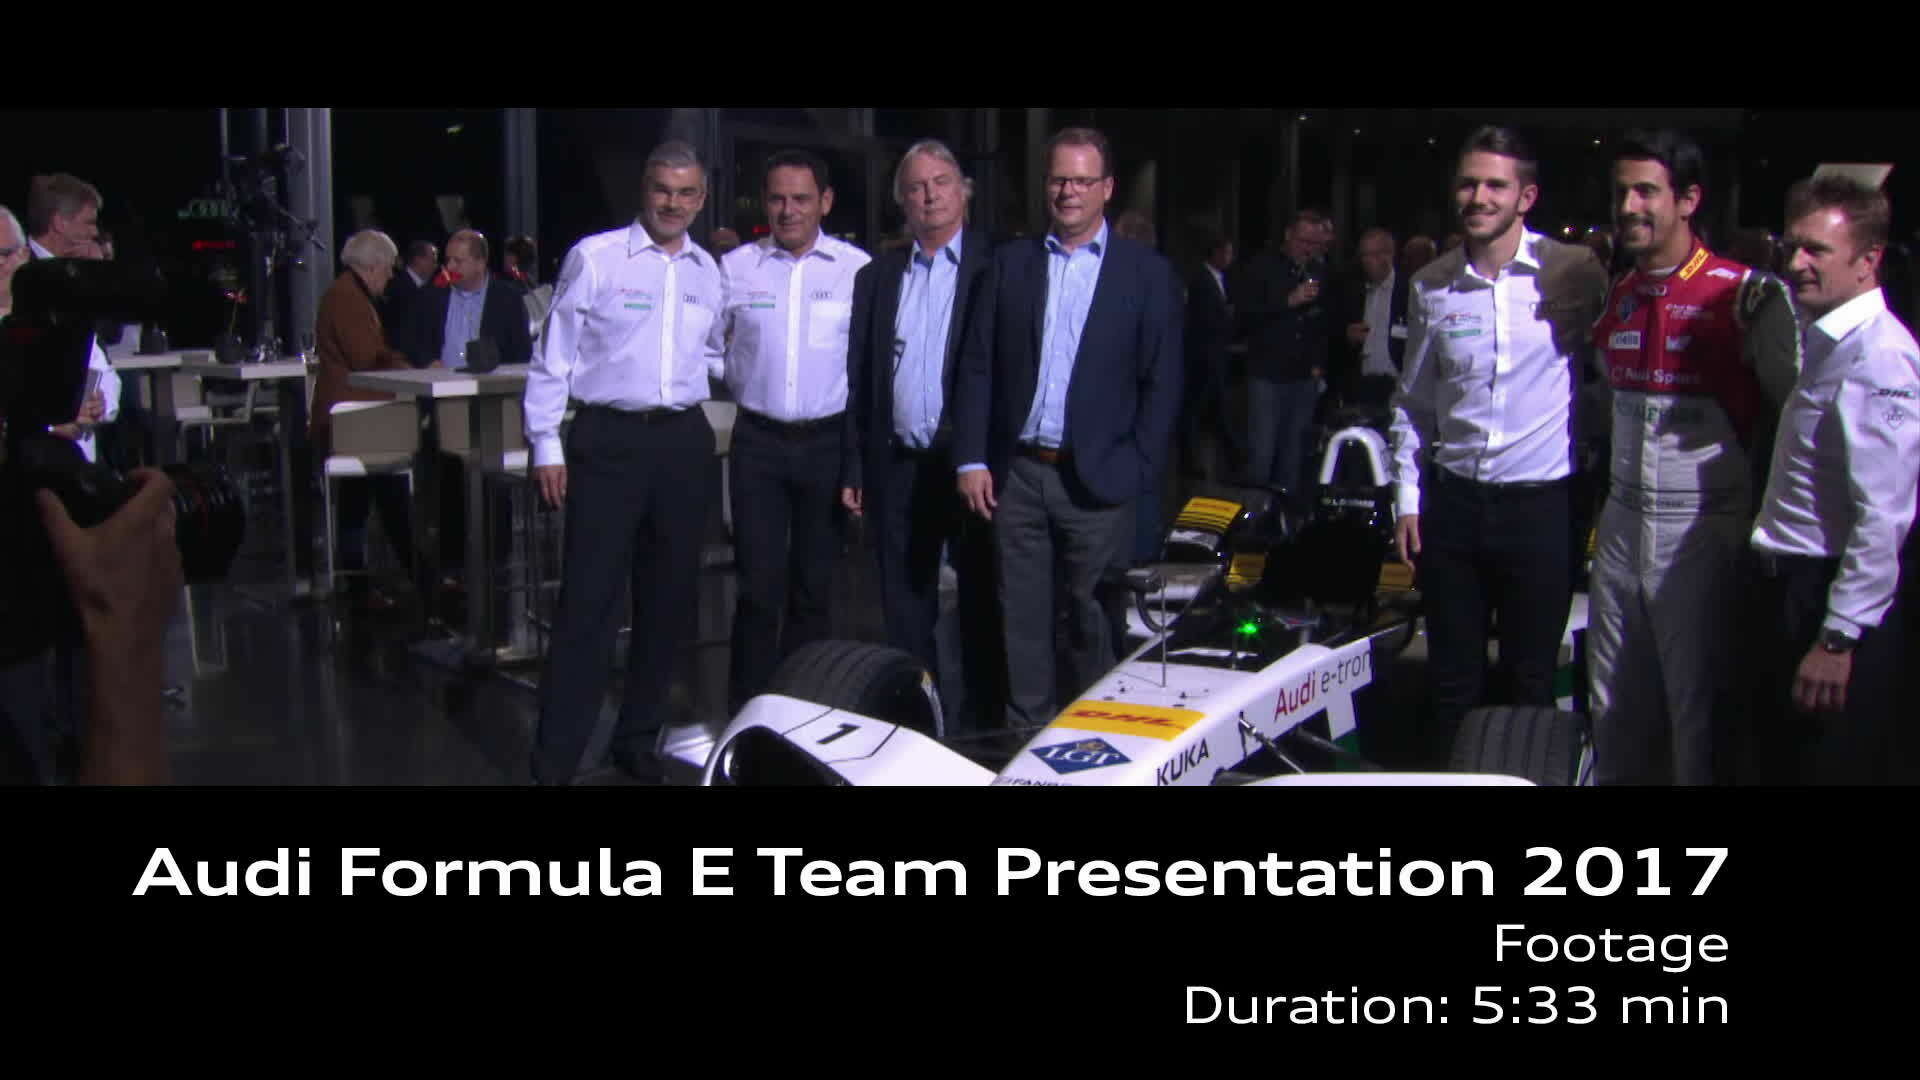 Audi Formula E Team Presentation 2017 Footage